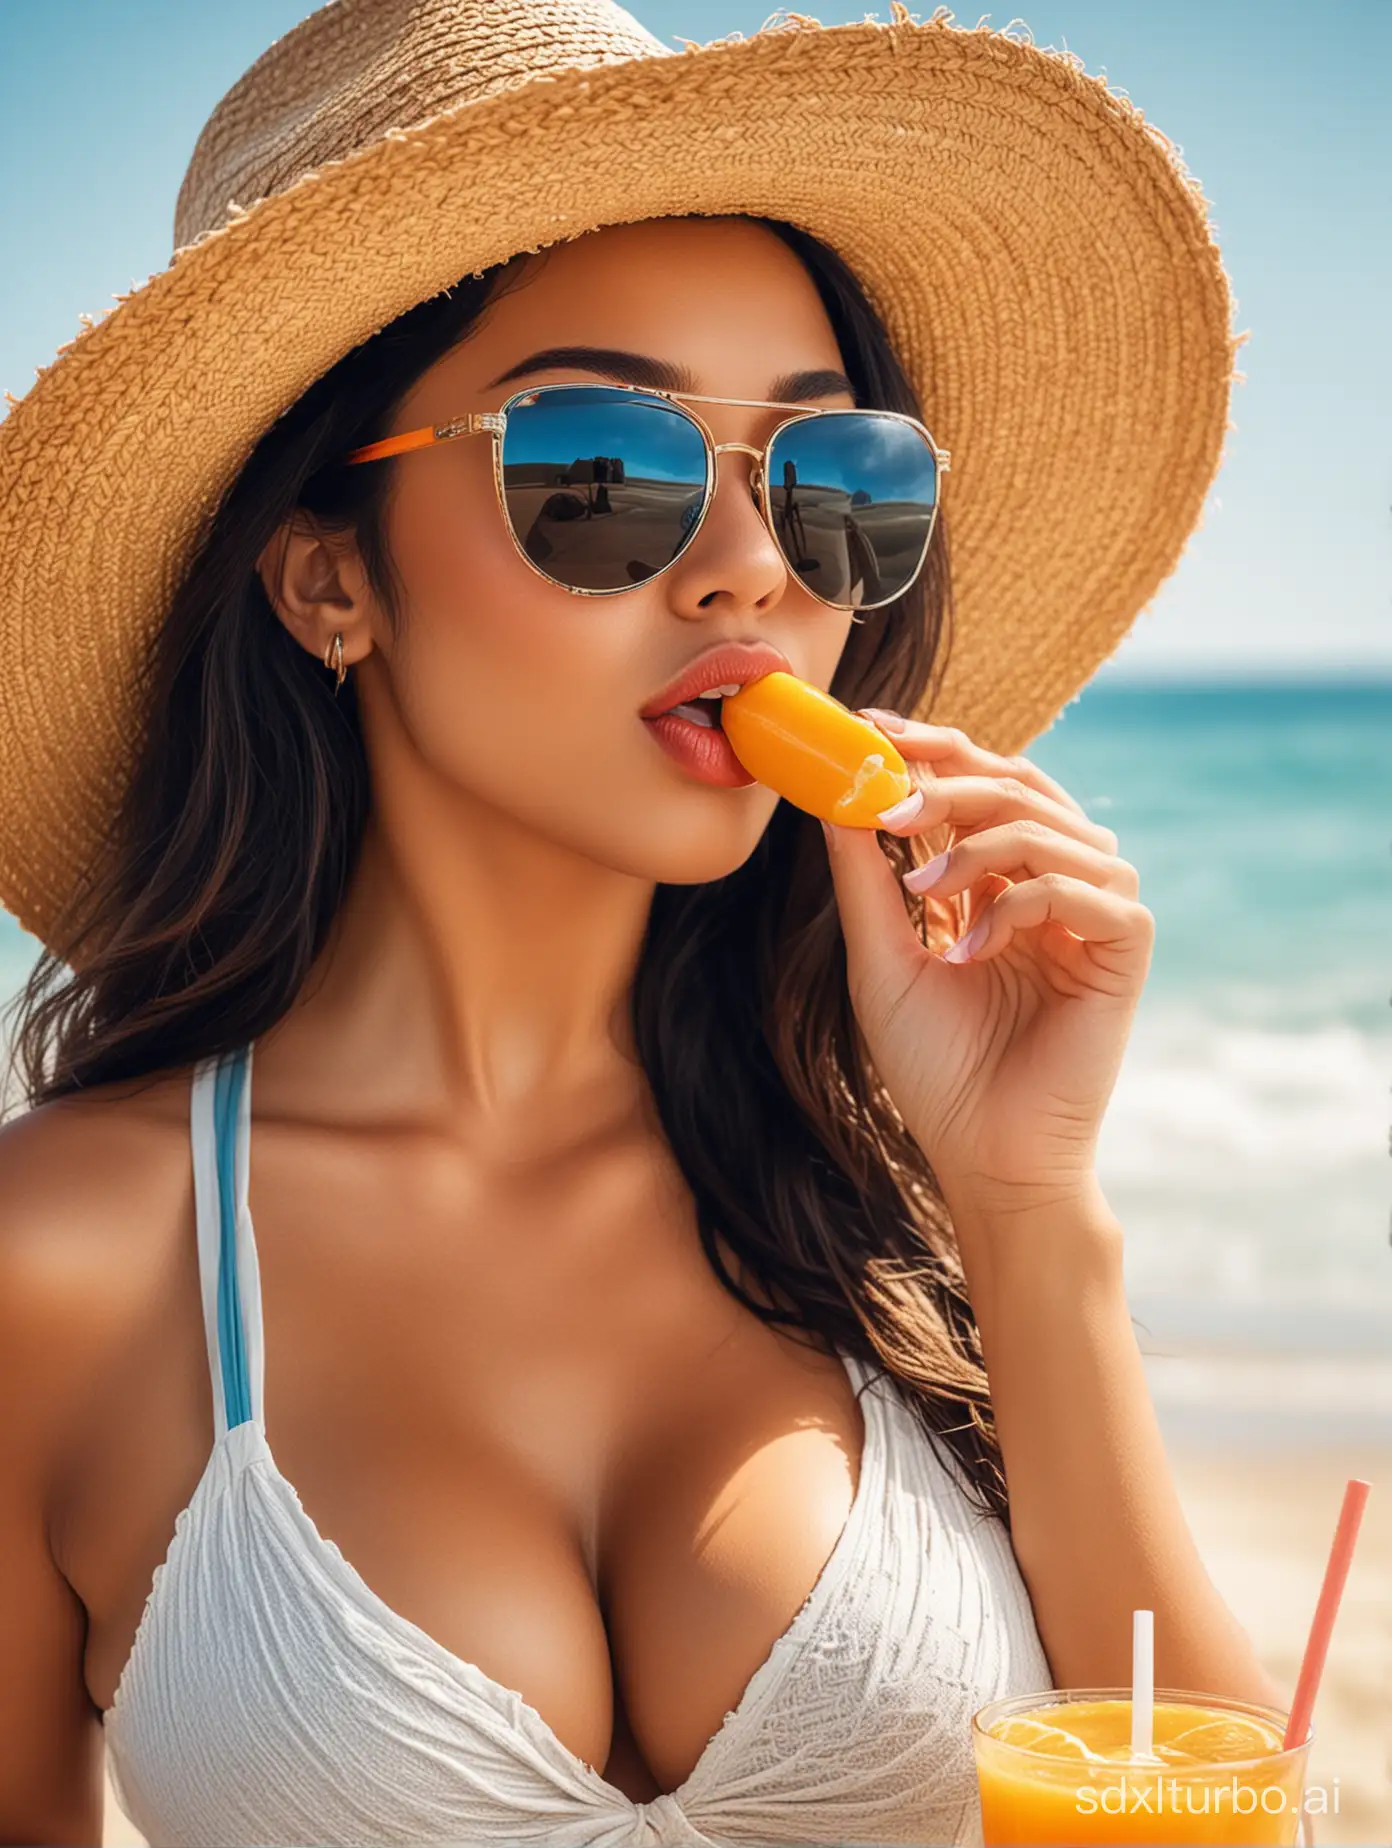 Busty-Latina-Enjoying-Refreshing-Juice-on-Beach